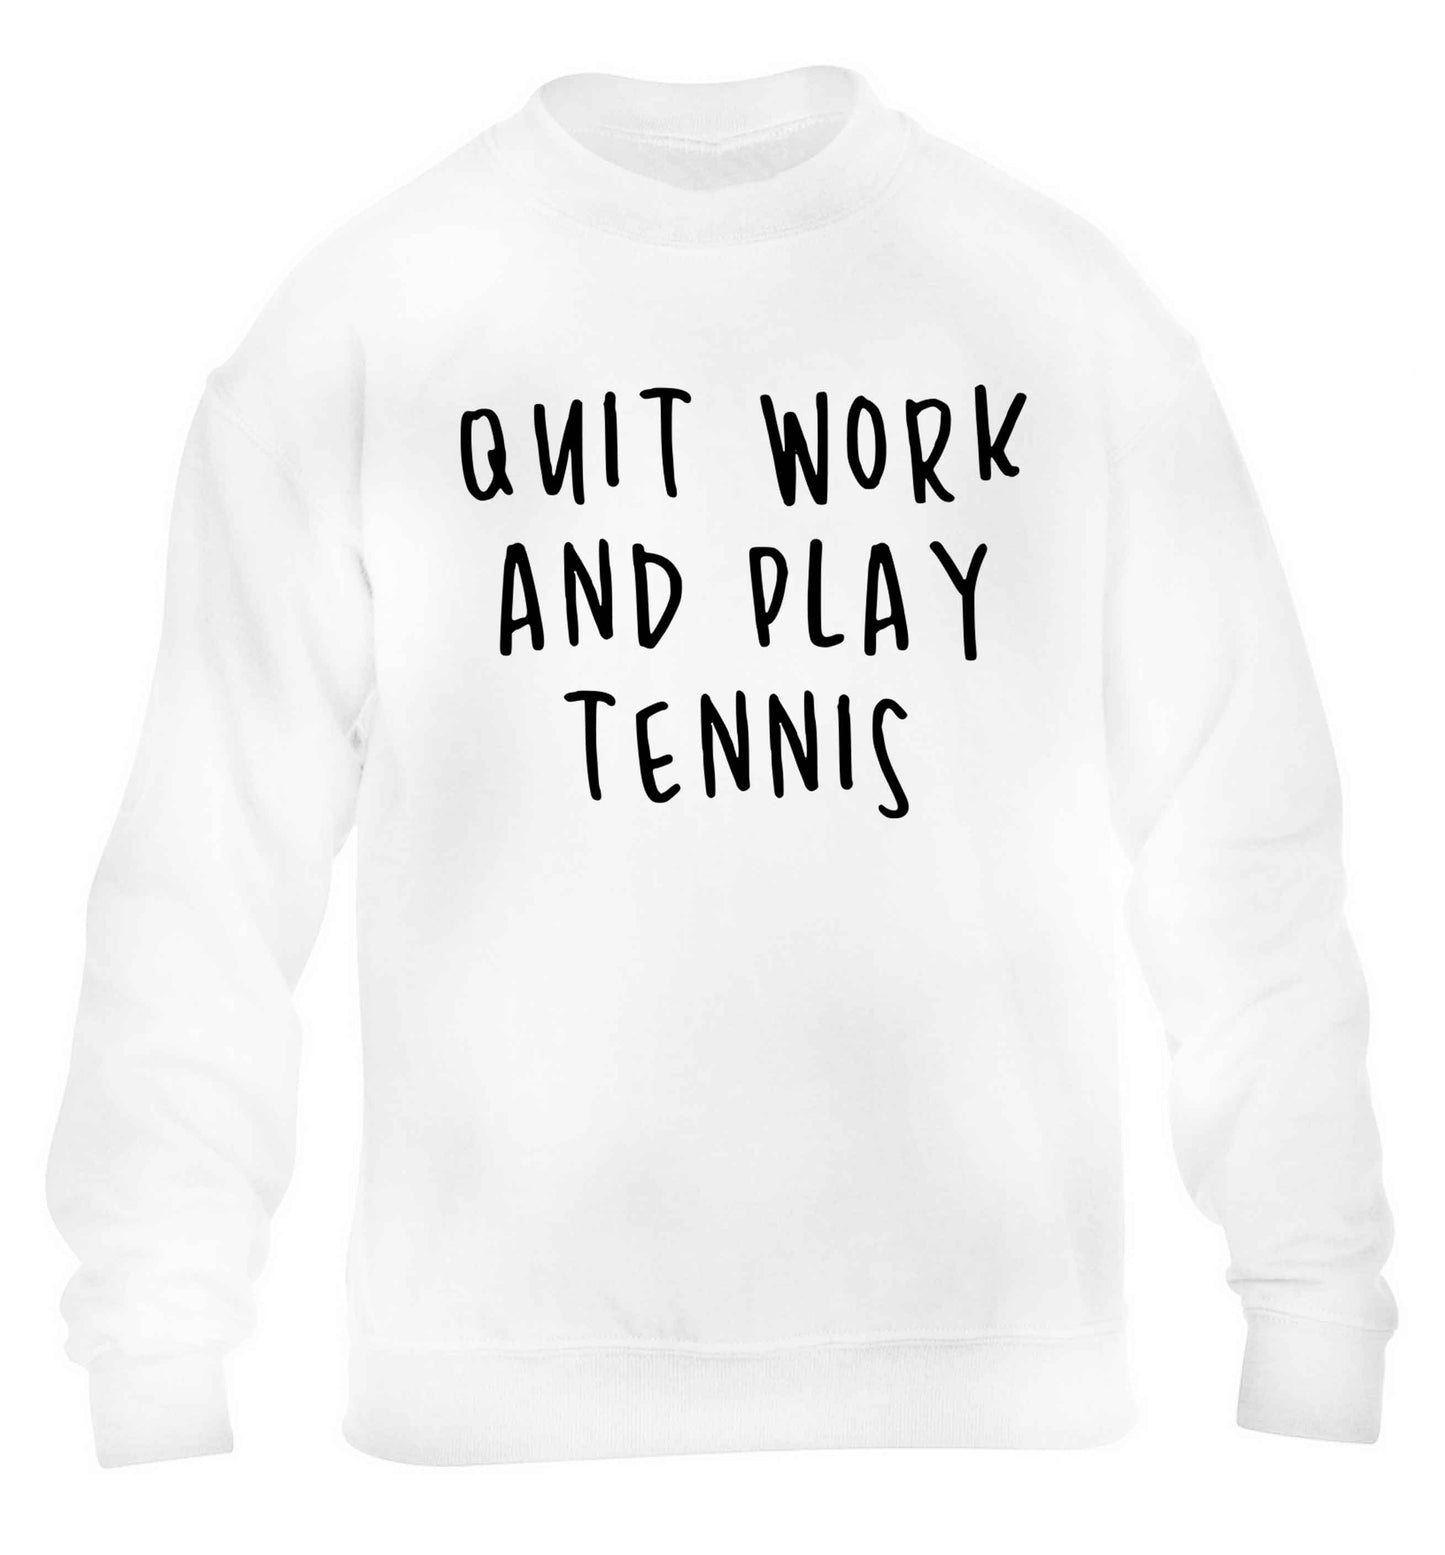 Quit work and play tennis children's white sweater 12-13 Years